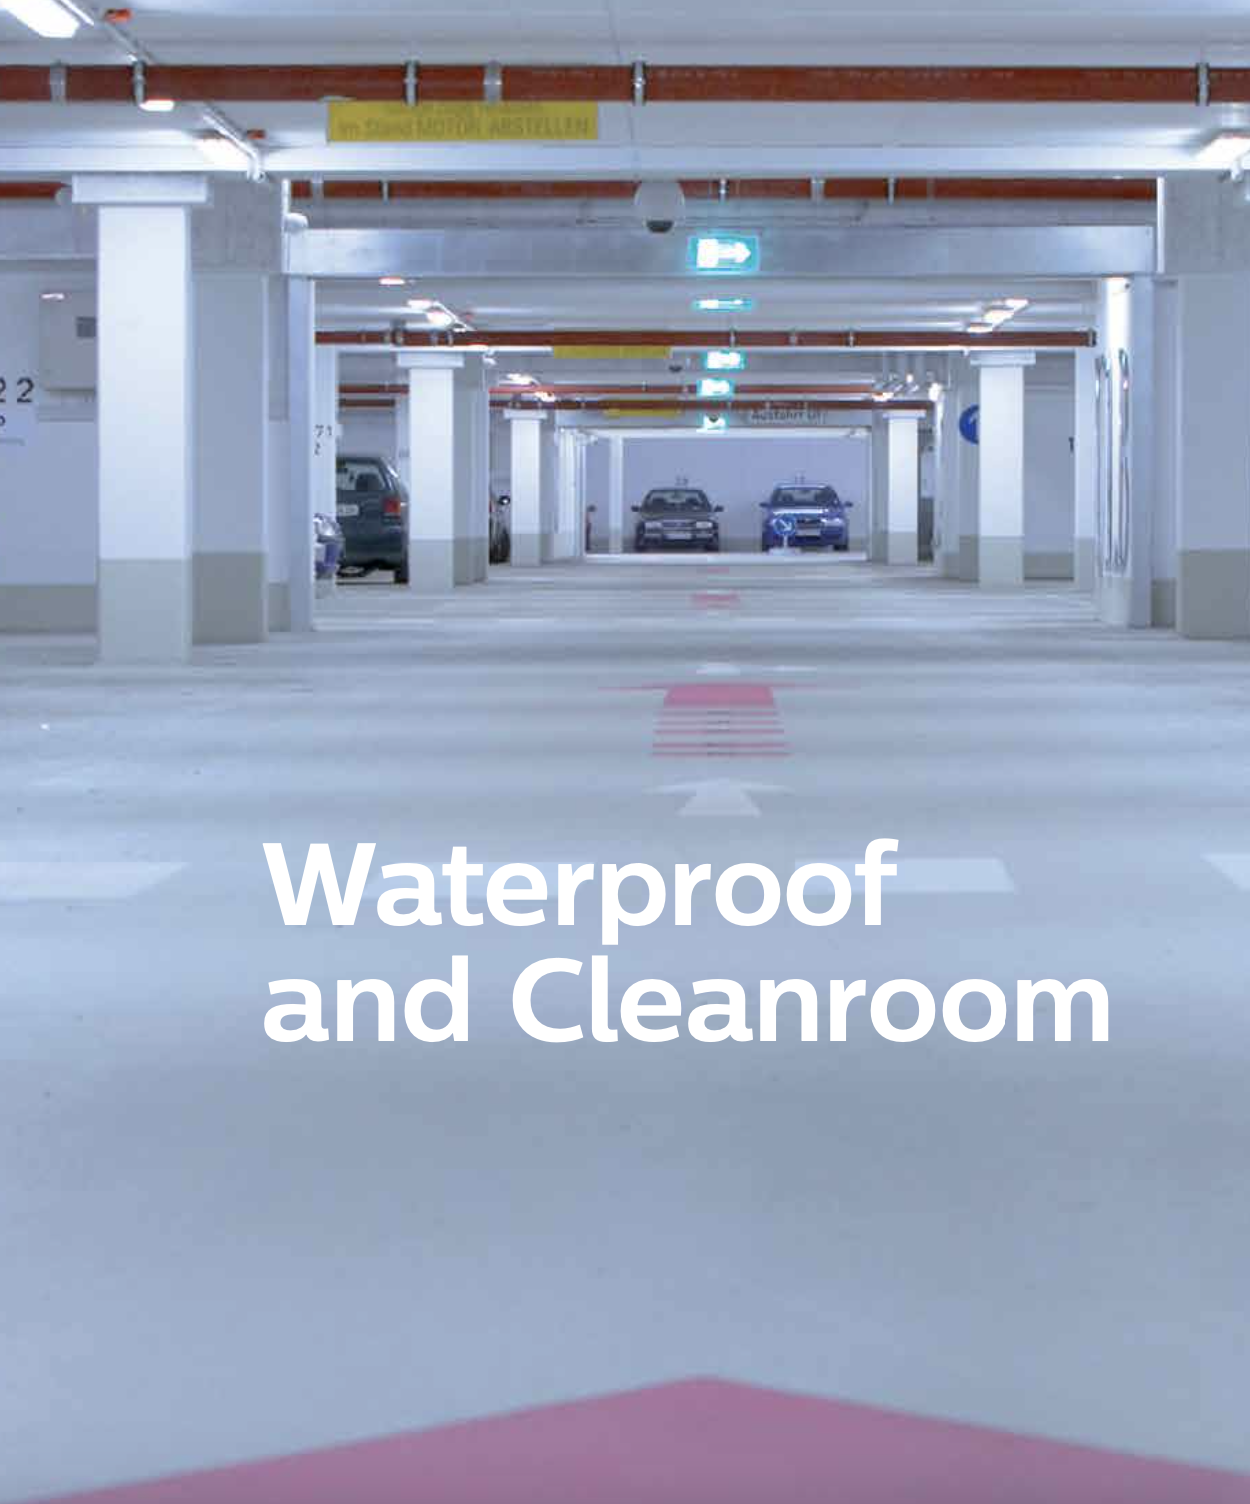 Philips Waterproof and Cleanroom